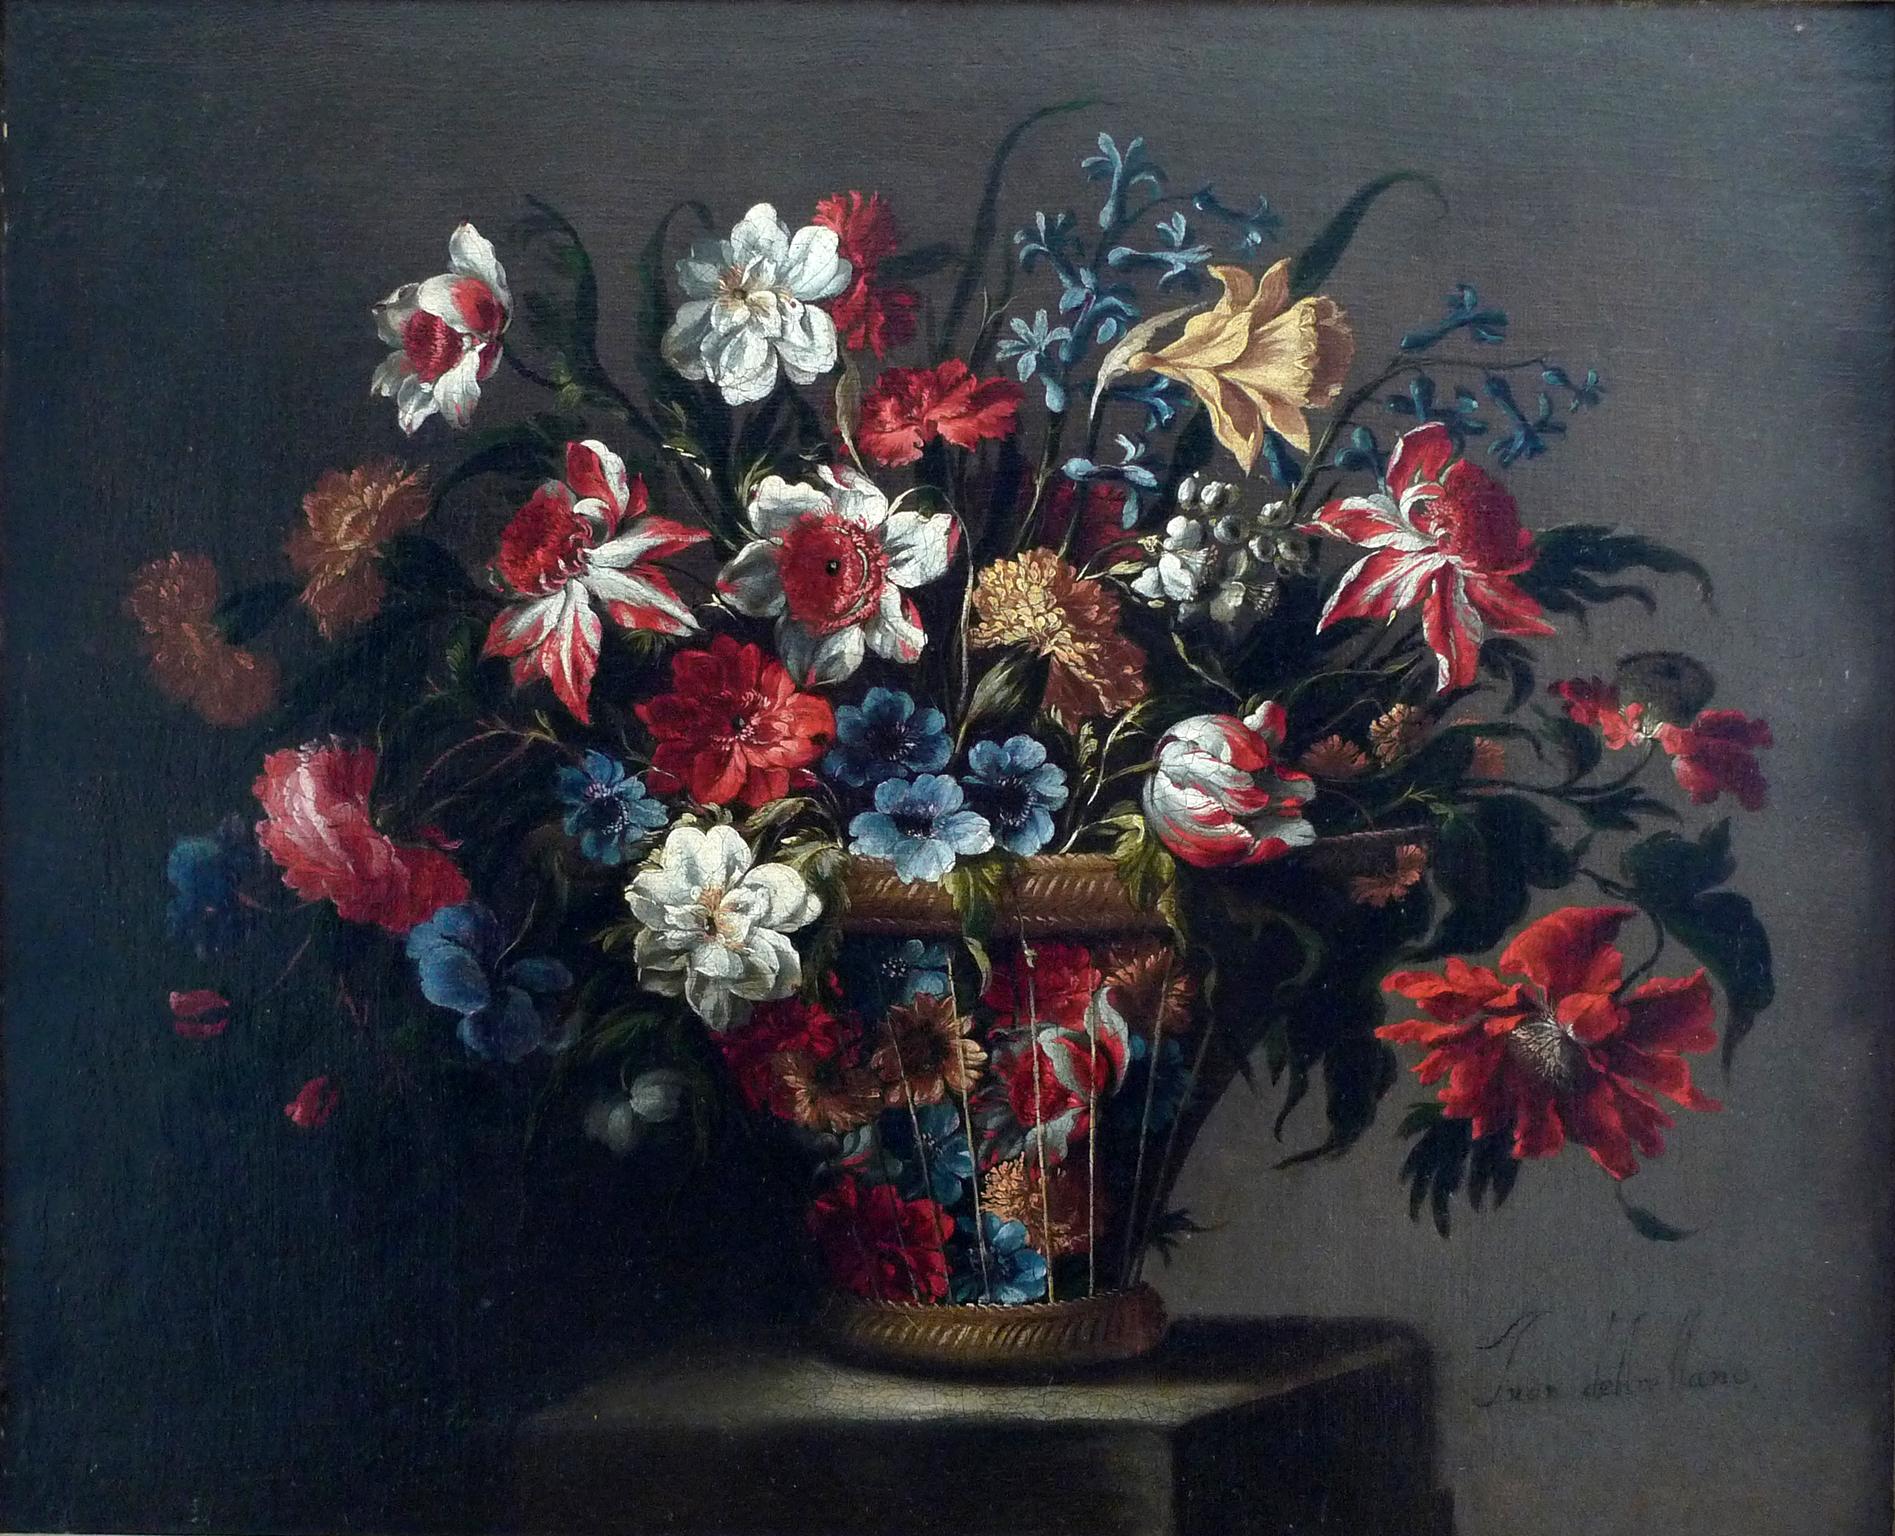 "Cesta de flores", 17th Century Oil on Canvas, Still Flowers by Juan de Arellano